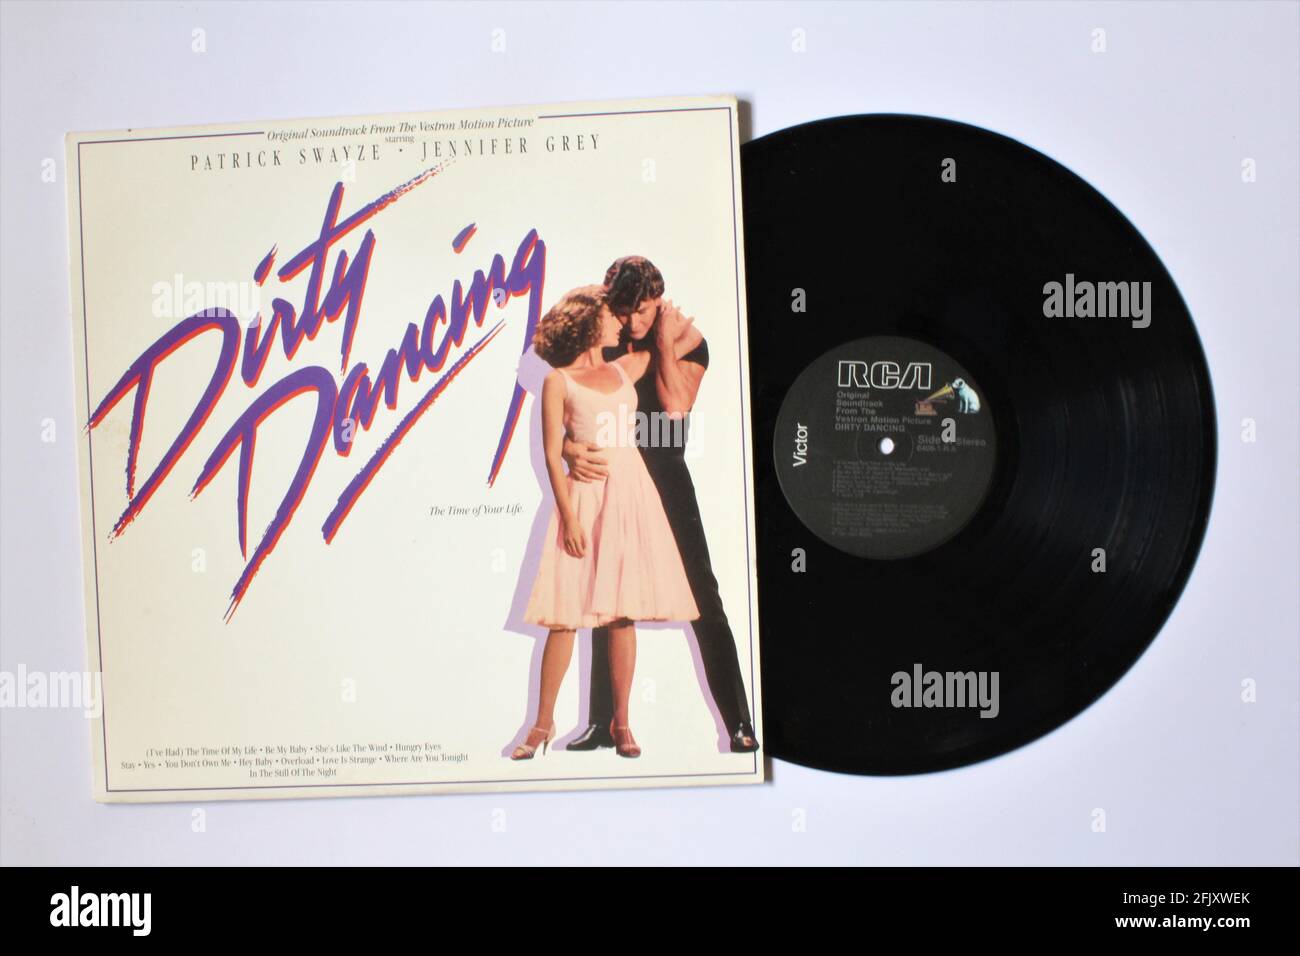 Dancing: Original Soundtrack from the Vestron Motion Picture. Music album on vinyl record LP disc Stock Photo - Alamy